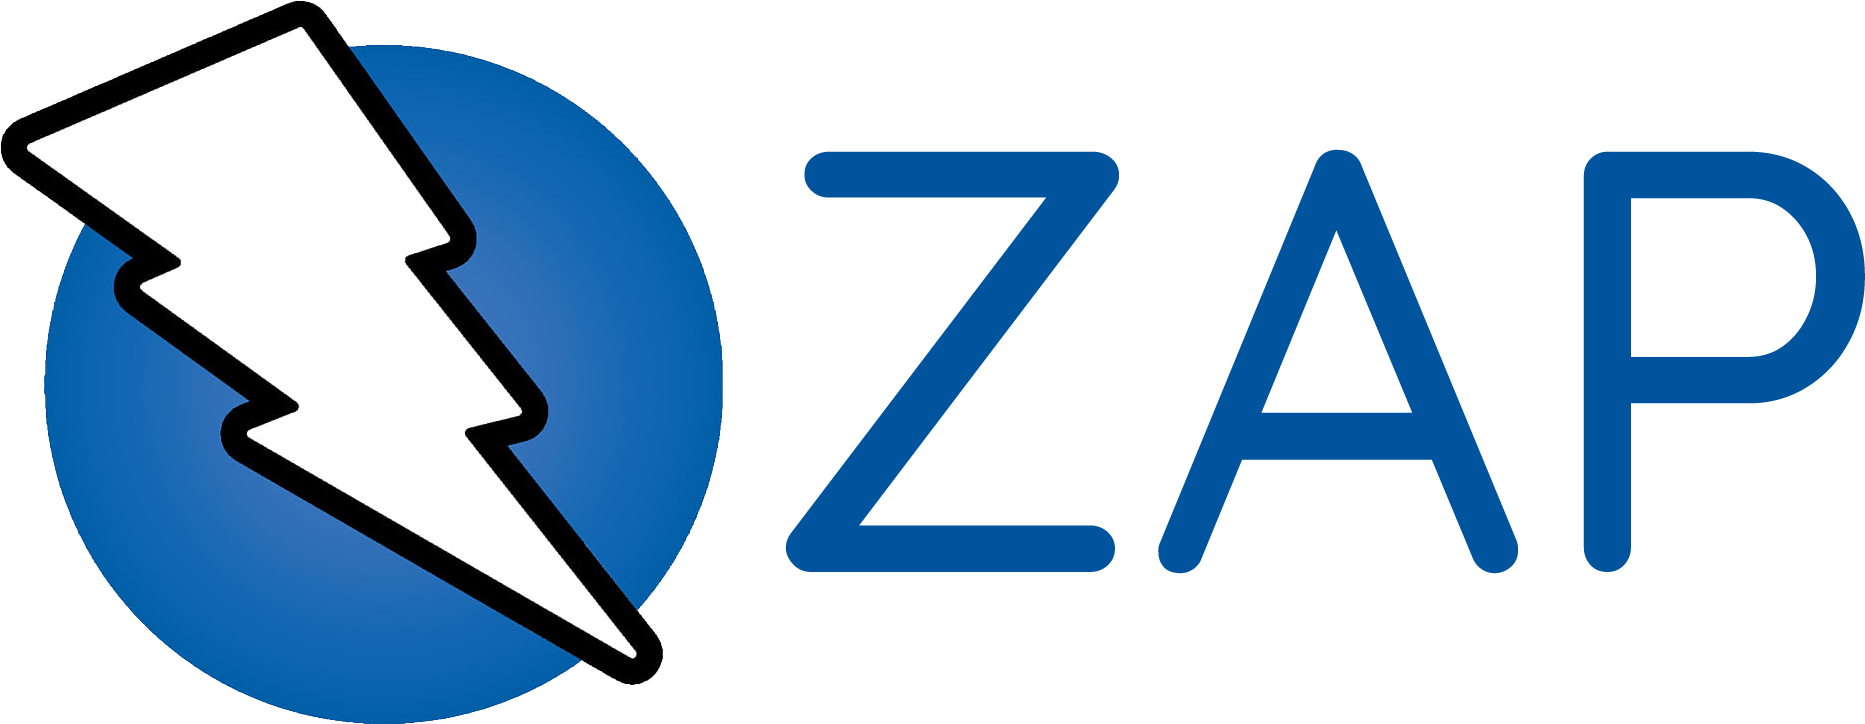 zap logo